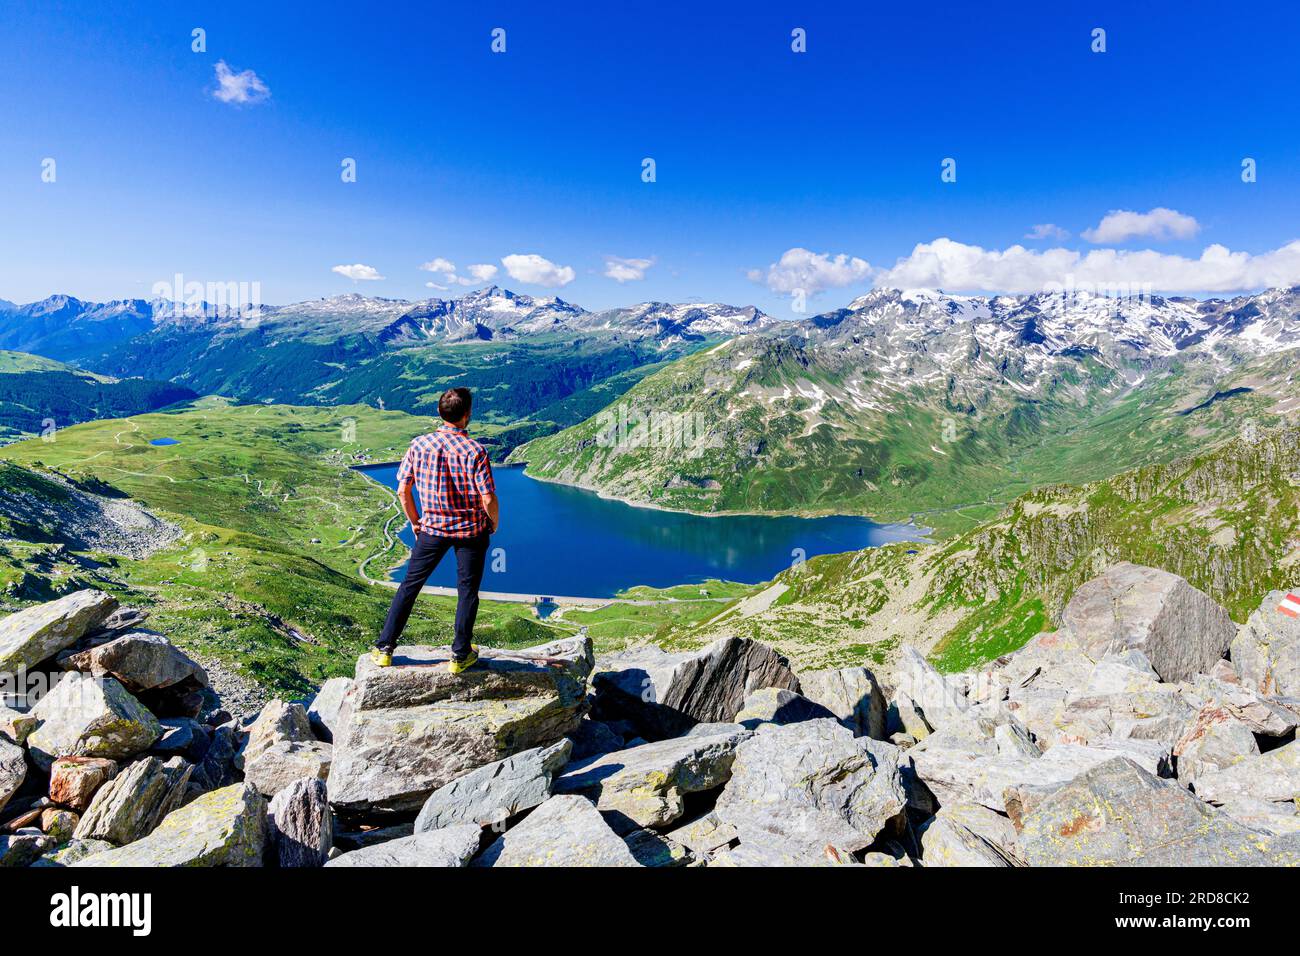 Un homme regardant le lac alpin de Montespluga debout sur des rochers, Madesimo, Valle Spluga, Valtellina, Lombardie, Italie, Europe Banque D'Images